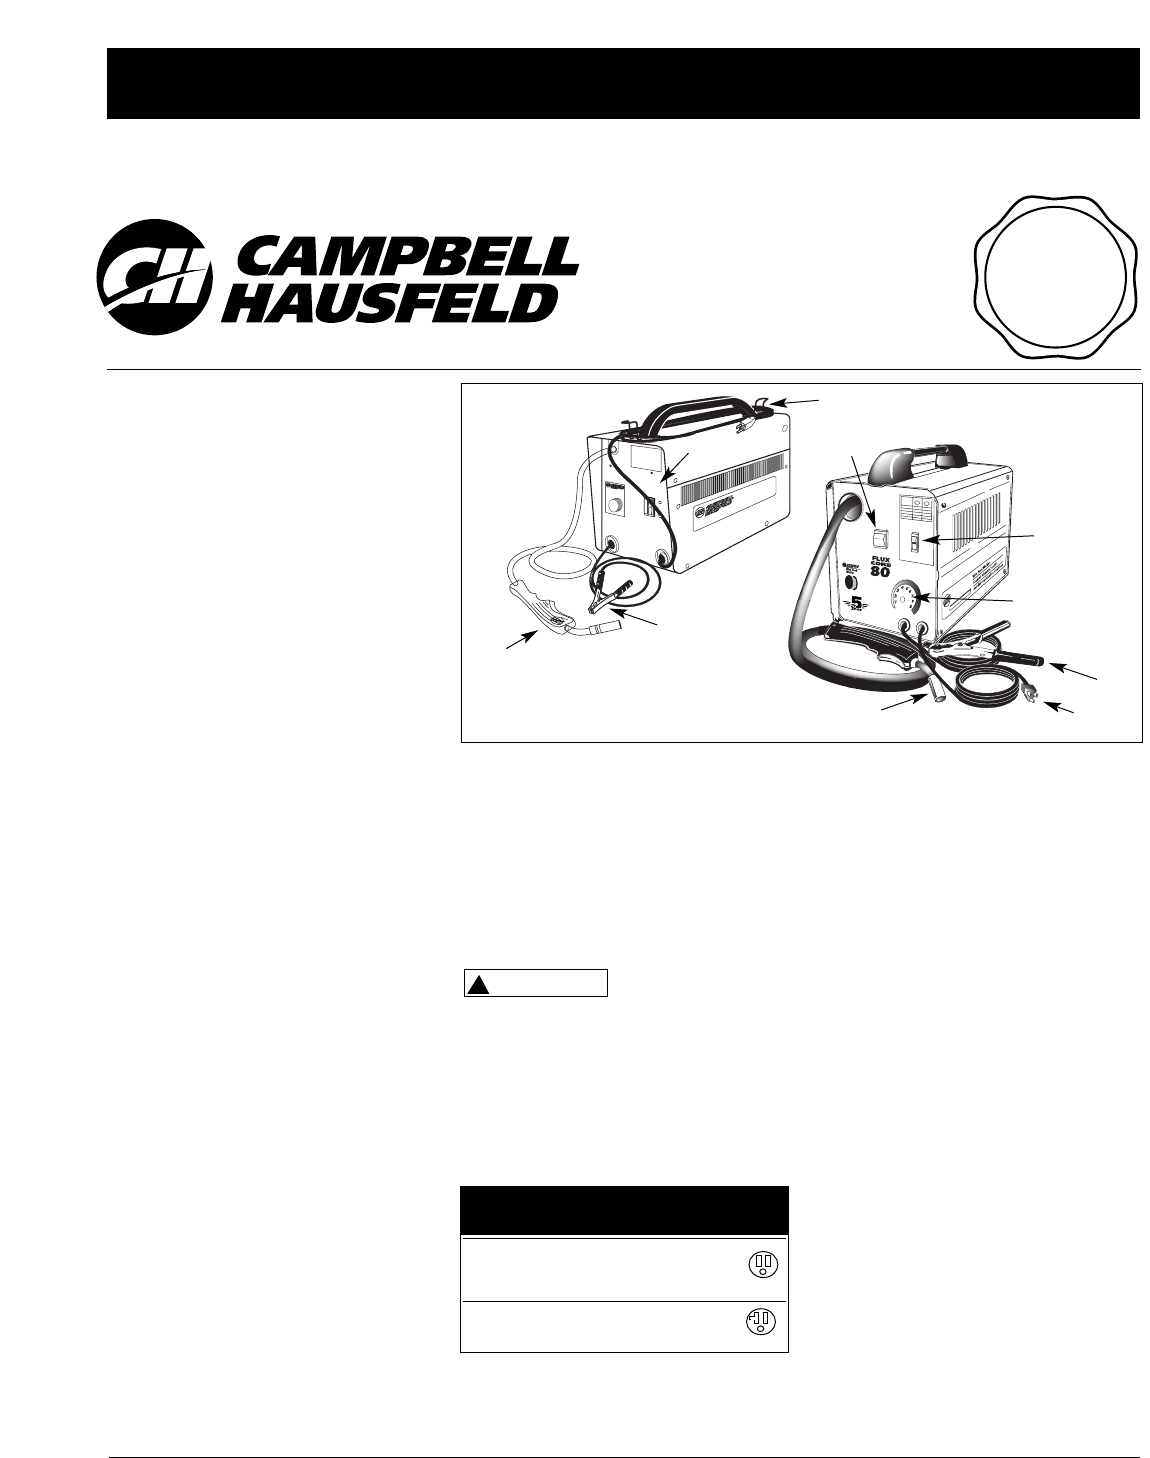 Campbell Hausfeld Welder Wf2000 User Guide Manualsonline Com